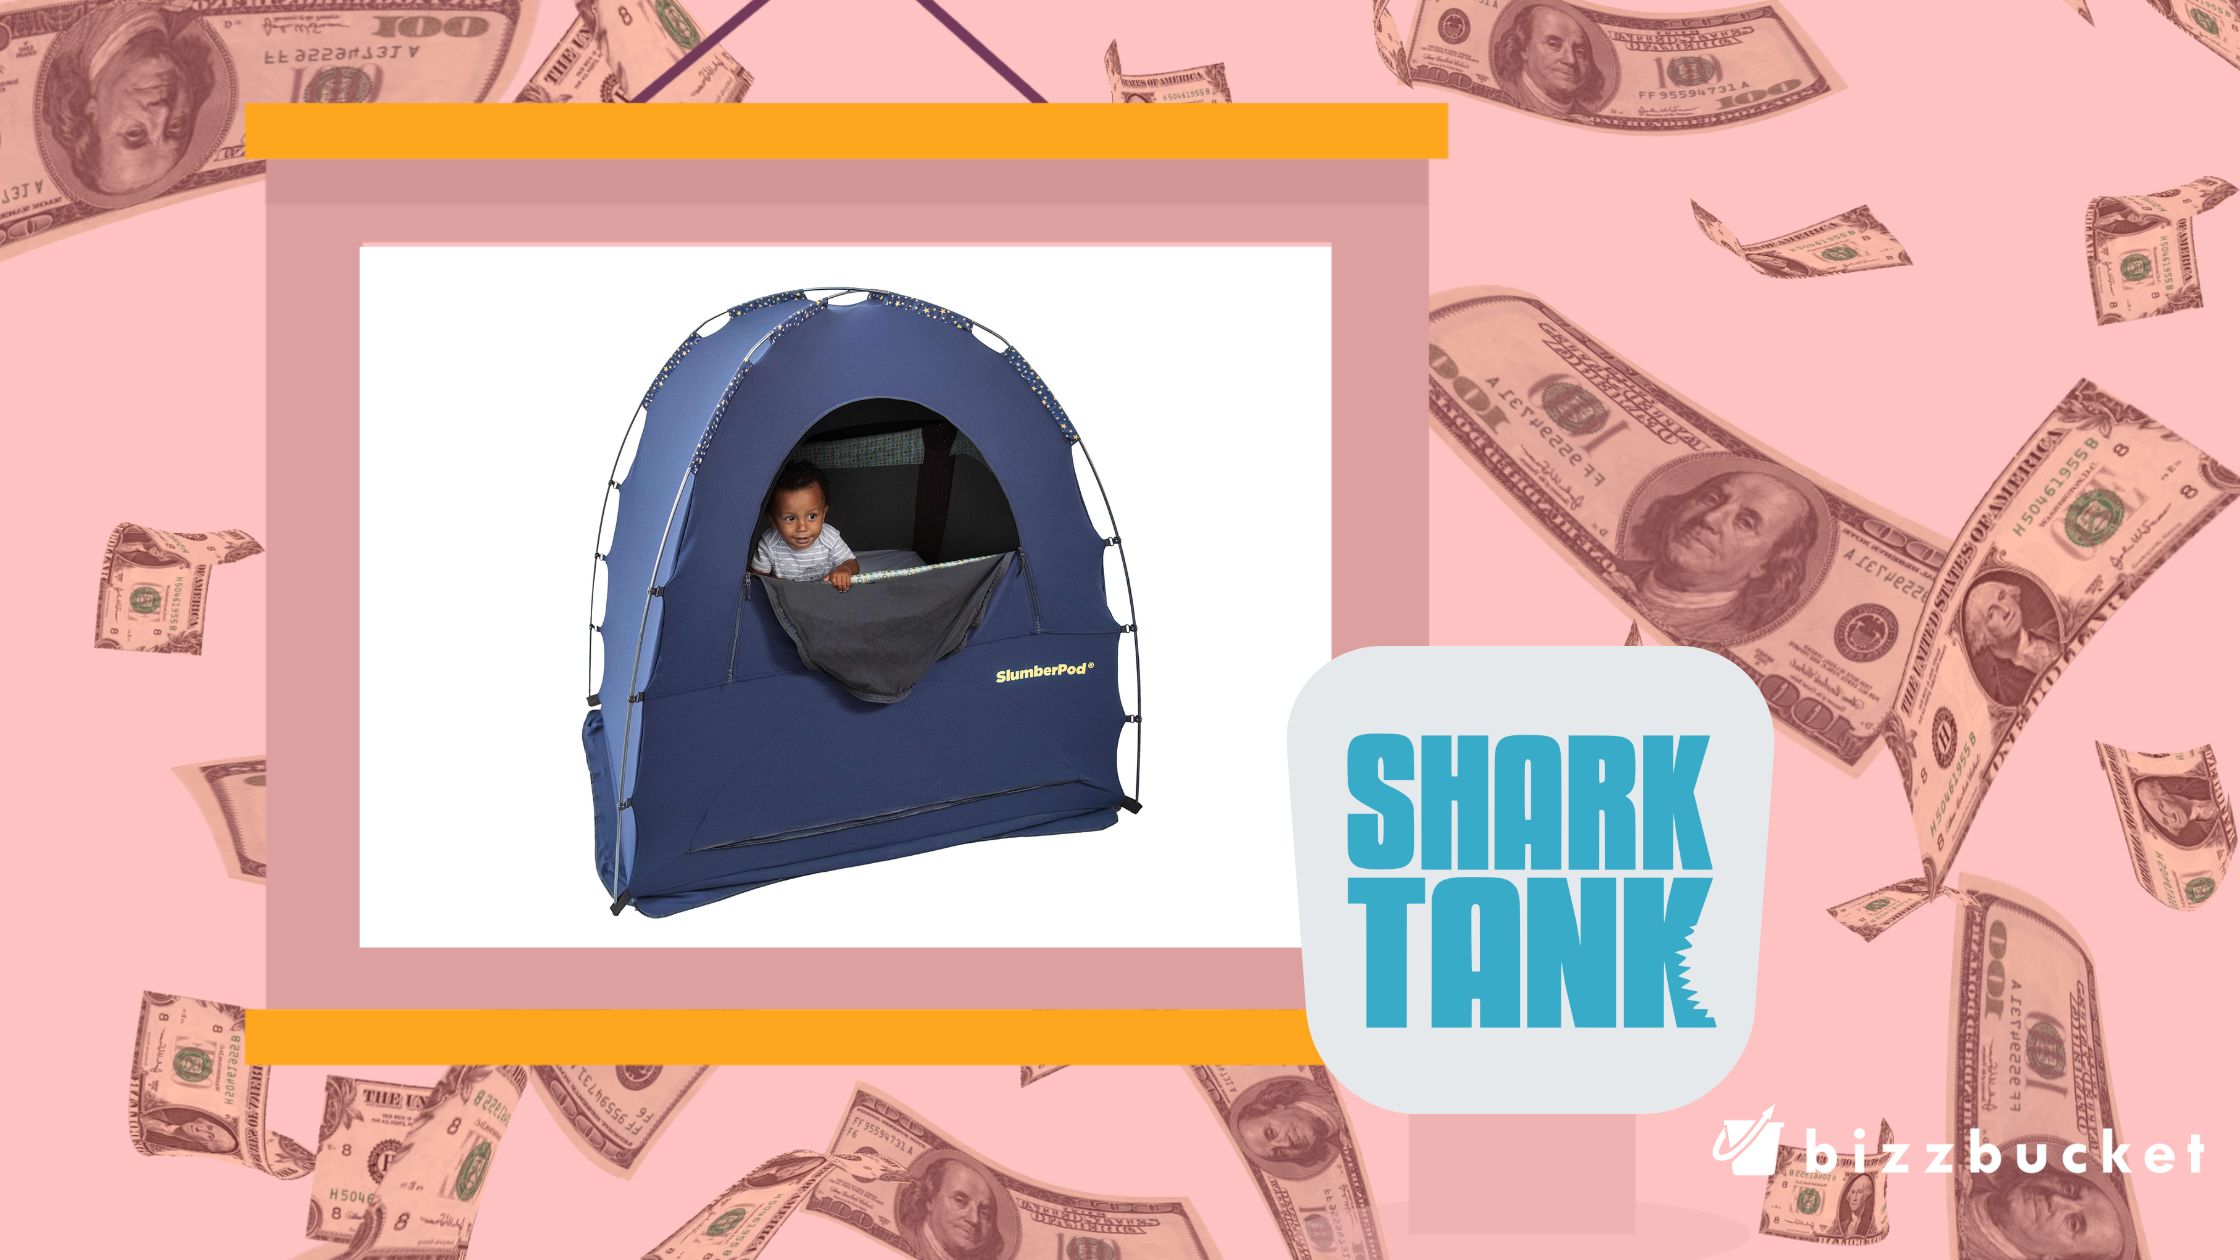 Slumber Pod shark tank update